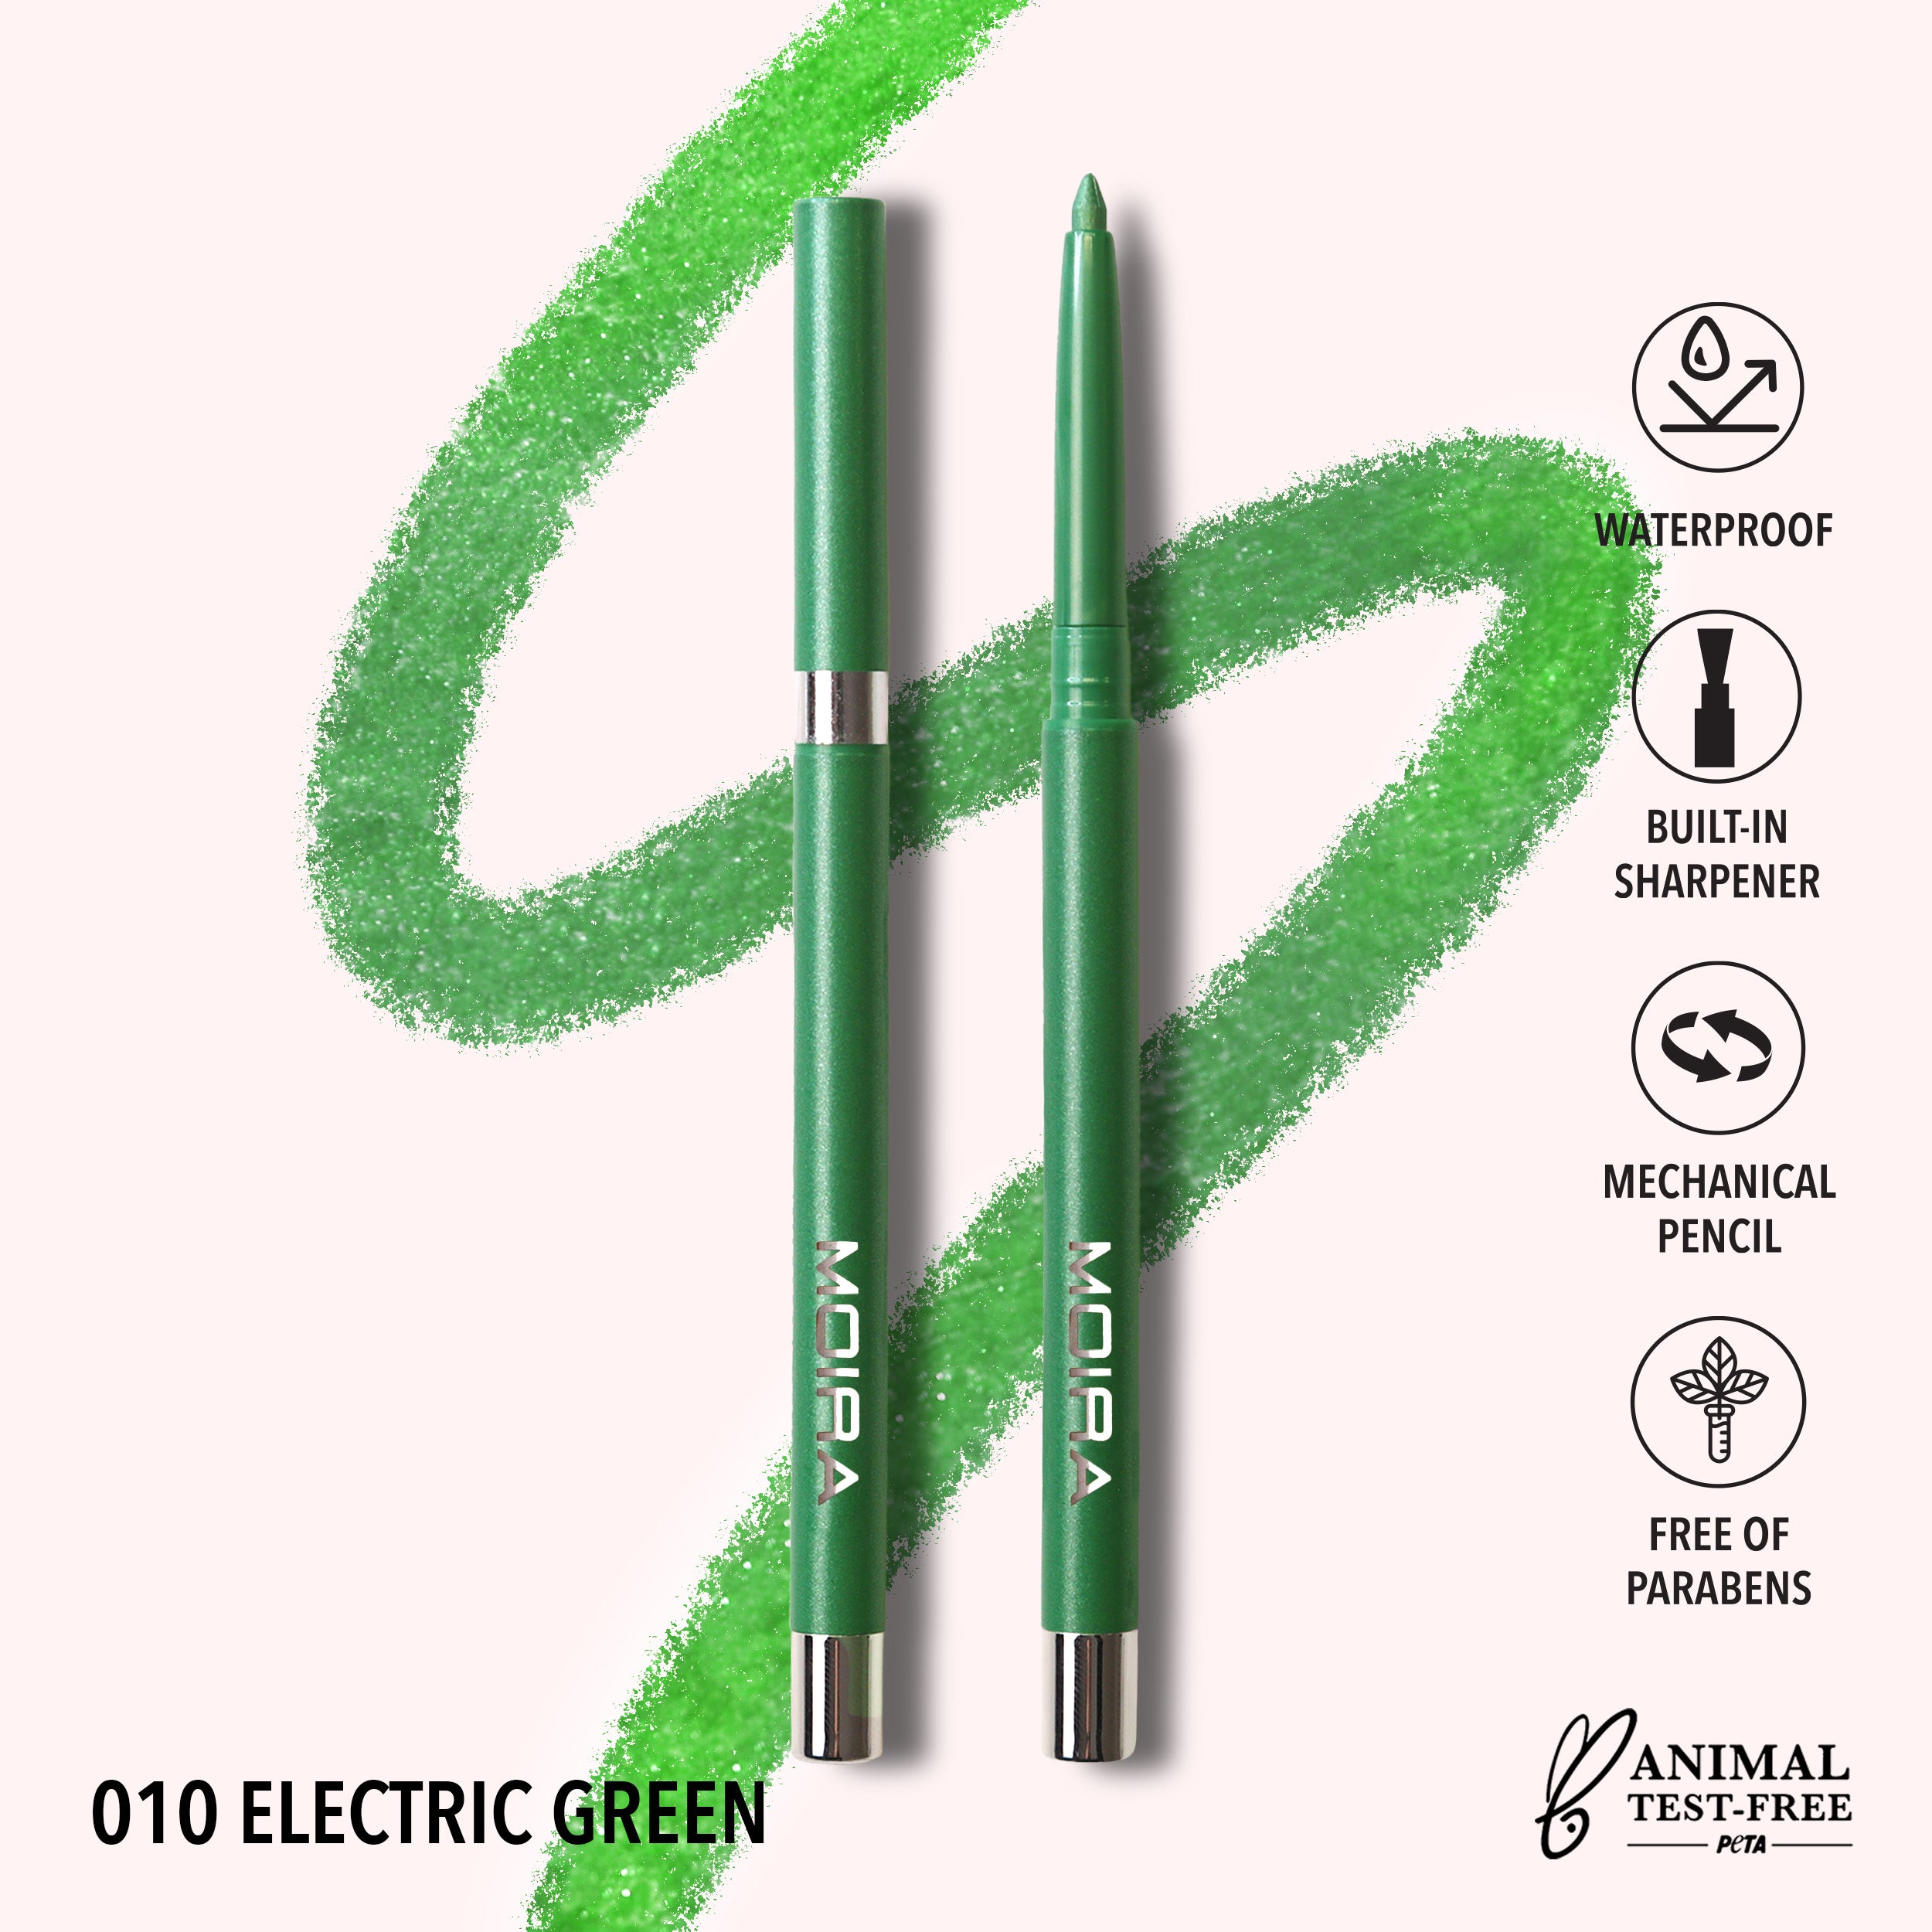 Statement Shimmer Liner (010, Electric Green)